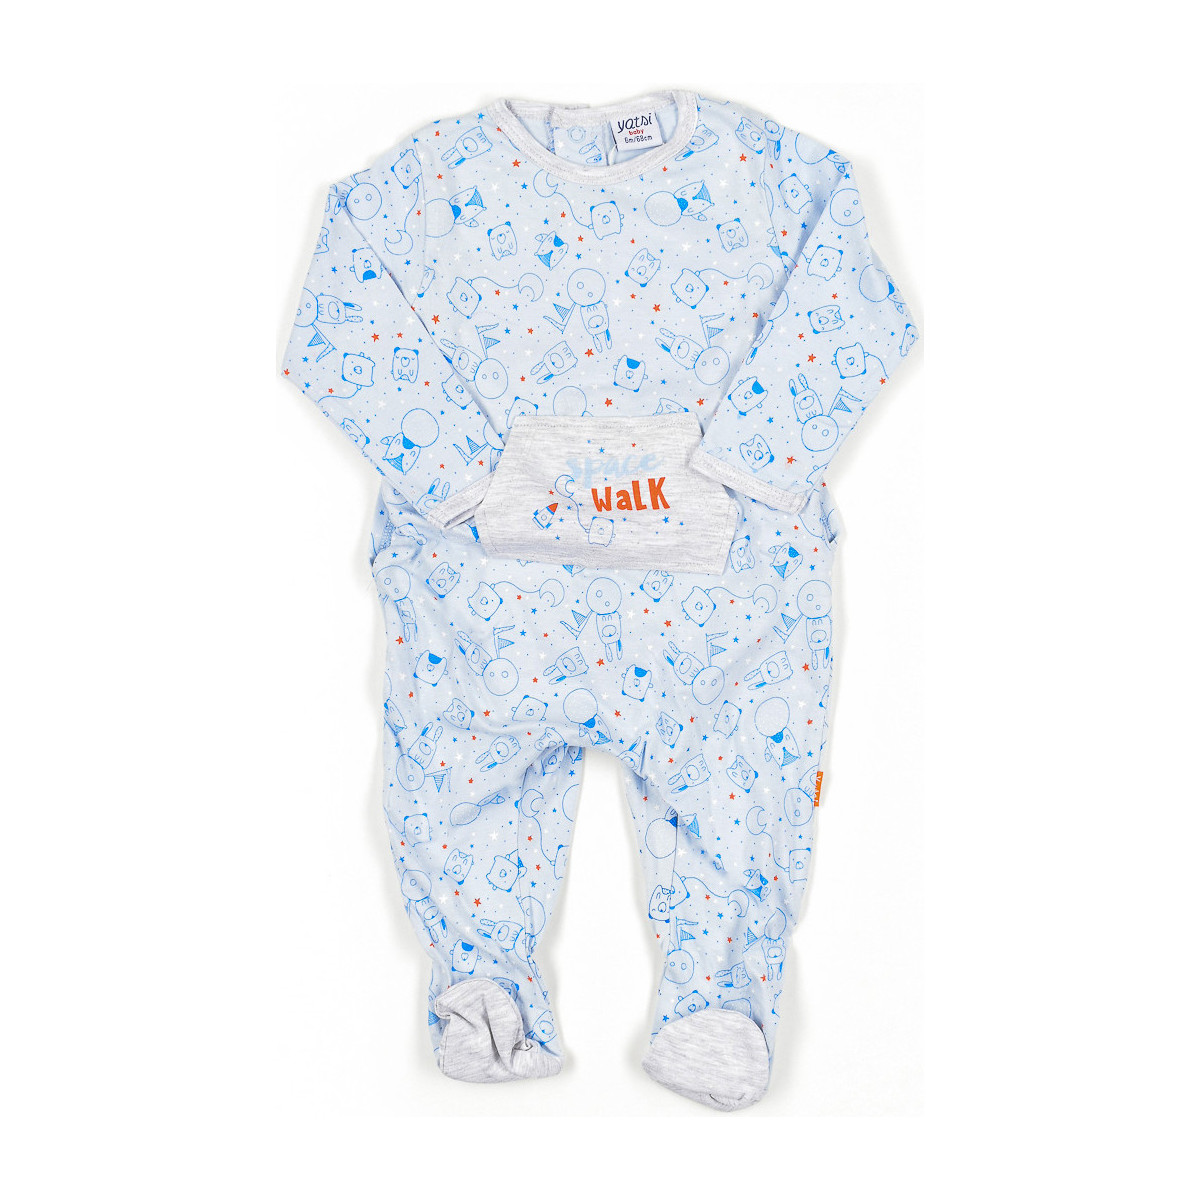 textil Børn Pyjamas / Natskjorte Yatsi 18105063-AZUL Flerfarvet